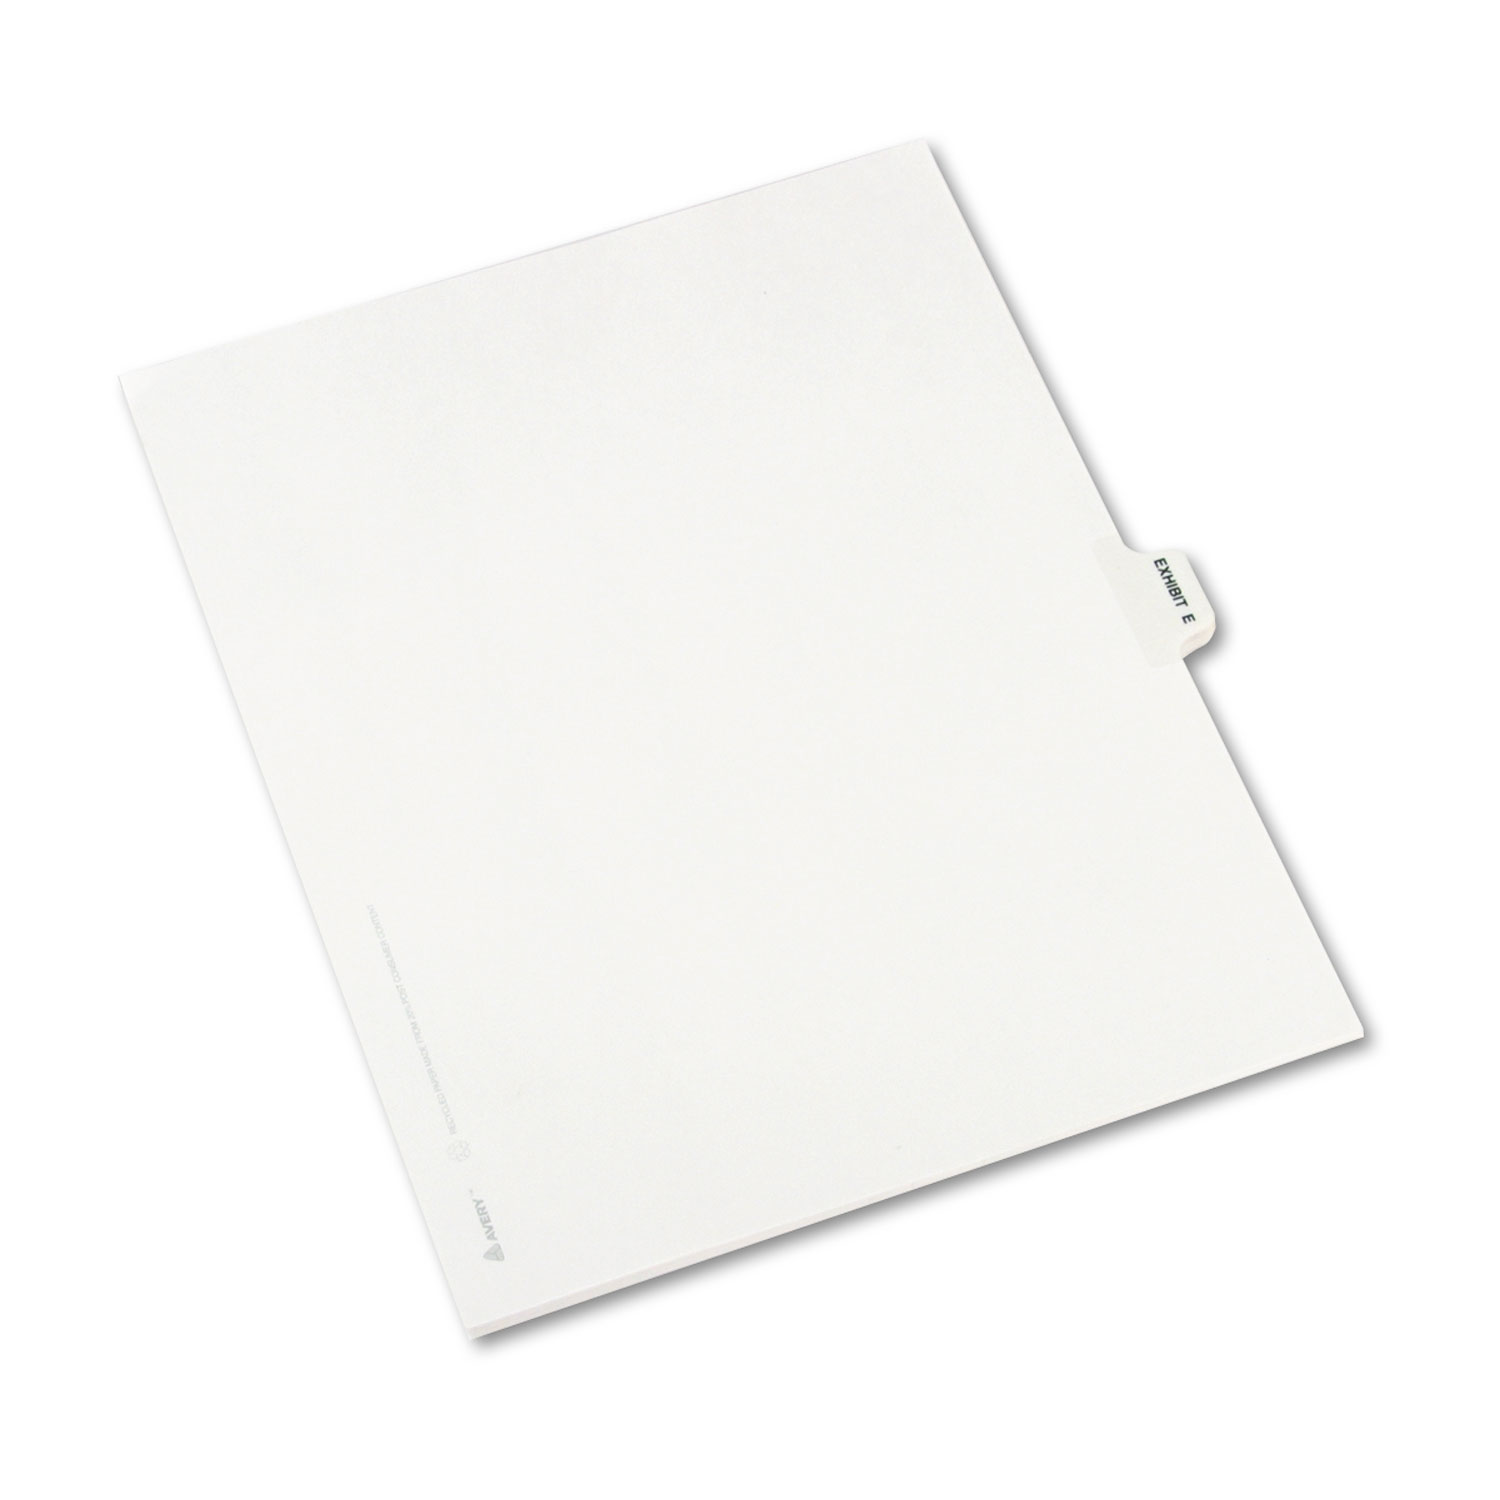 Avery-Style Preprinted Legal Side Tab Divider, Exhibit E, Letter, White, 25/Pack